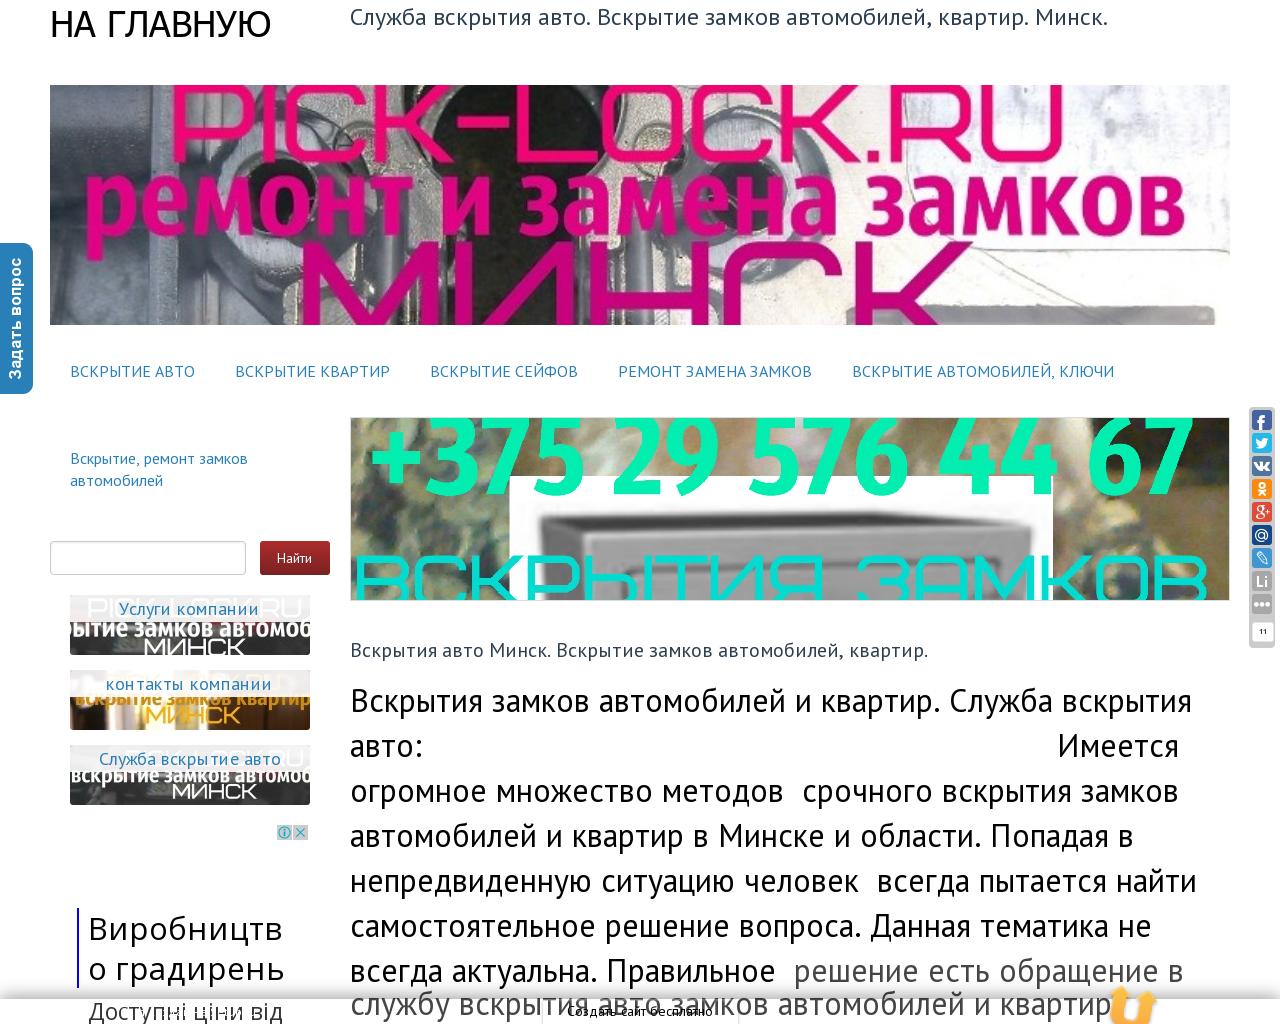 Изображение сайта pick-lock.ru в разрешении 1280x1024